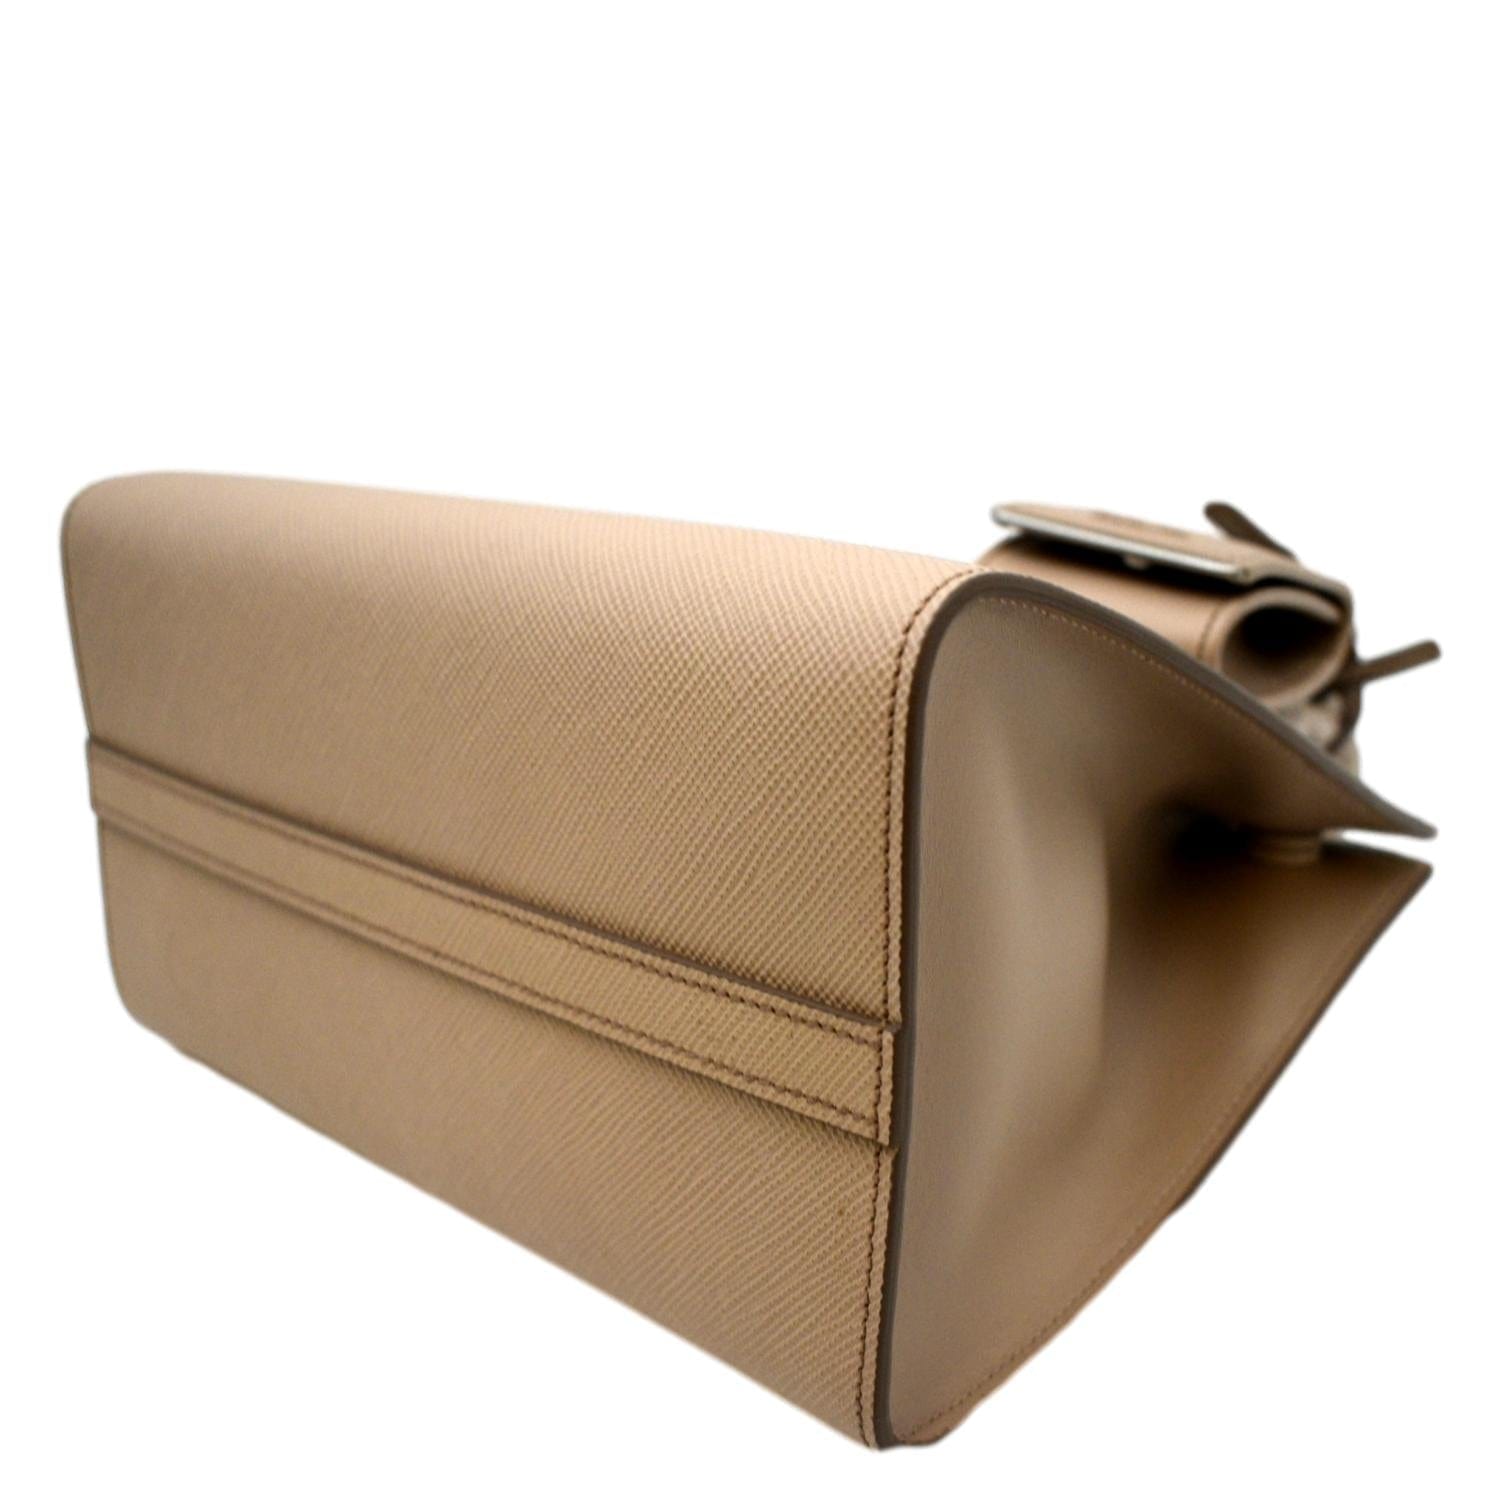 PRADA: Monochrome bag in saffiano leather - Blush Pink